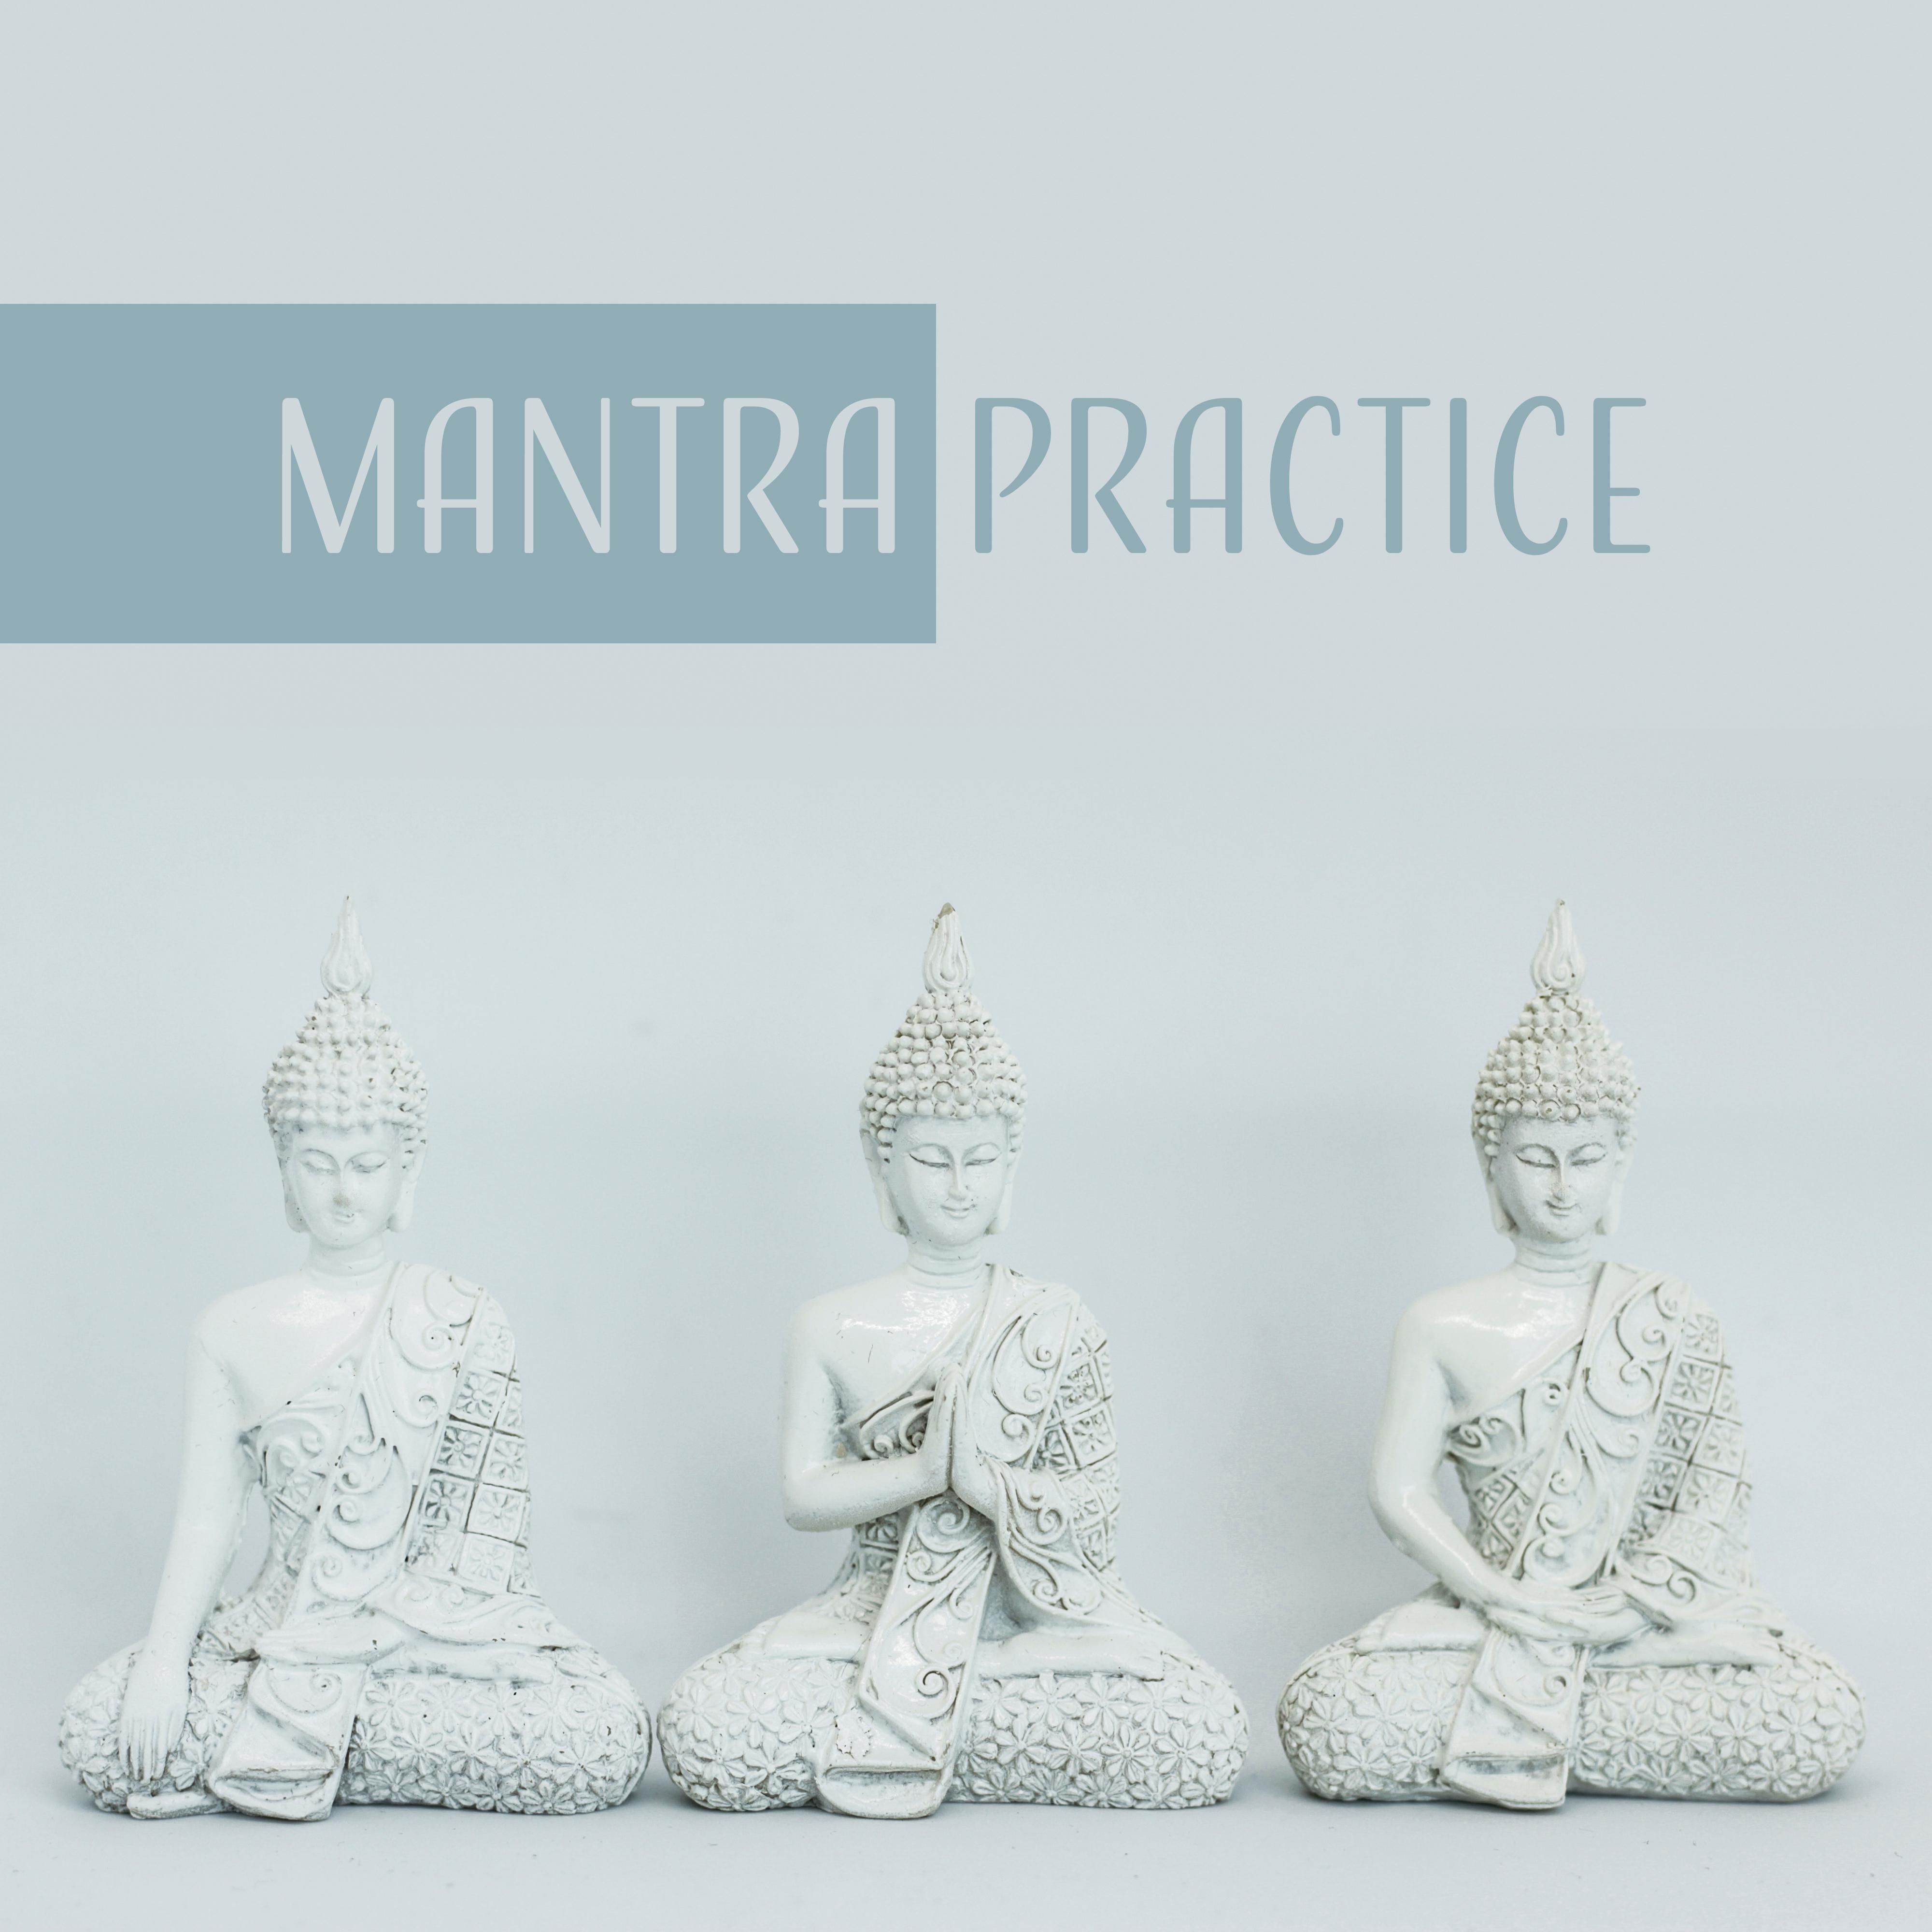 Mantra Practice  Tibetan New Age Music, Yoga, Meditation, Zen, Bliss, Kundalini